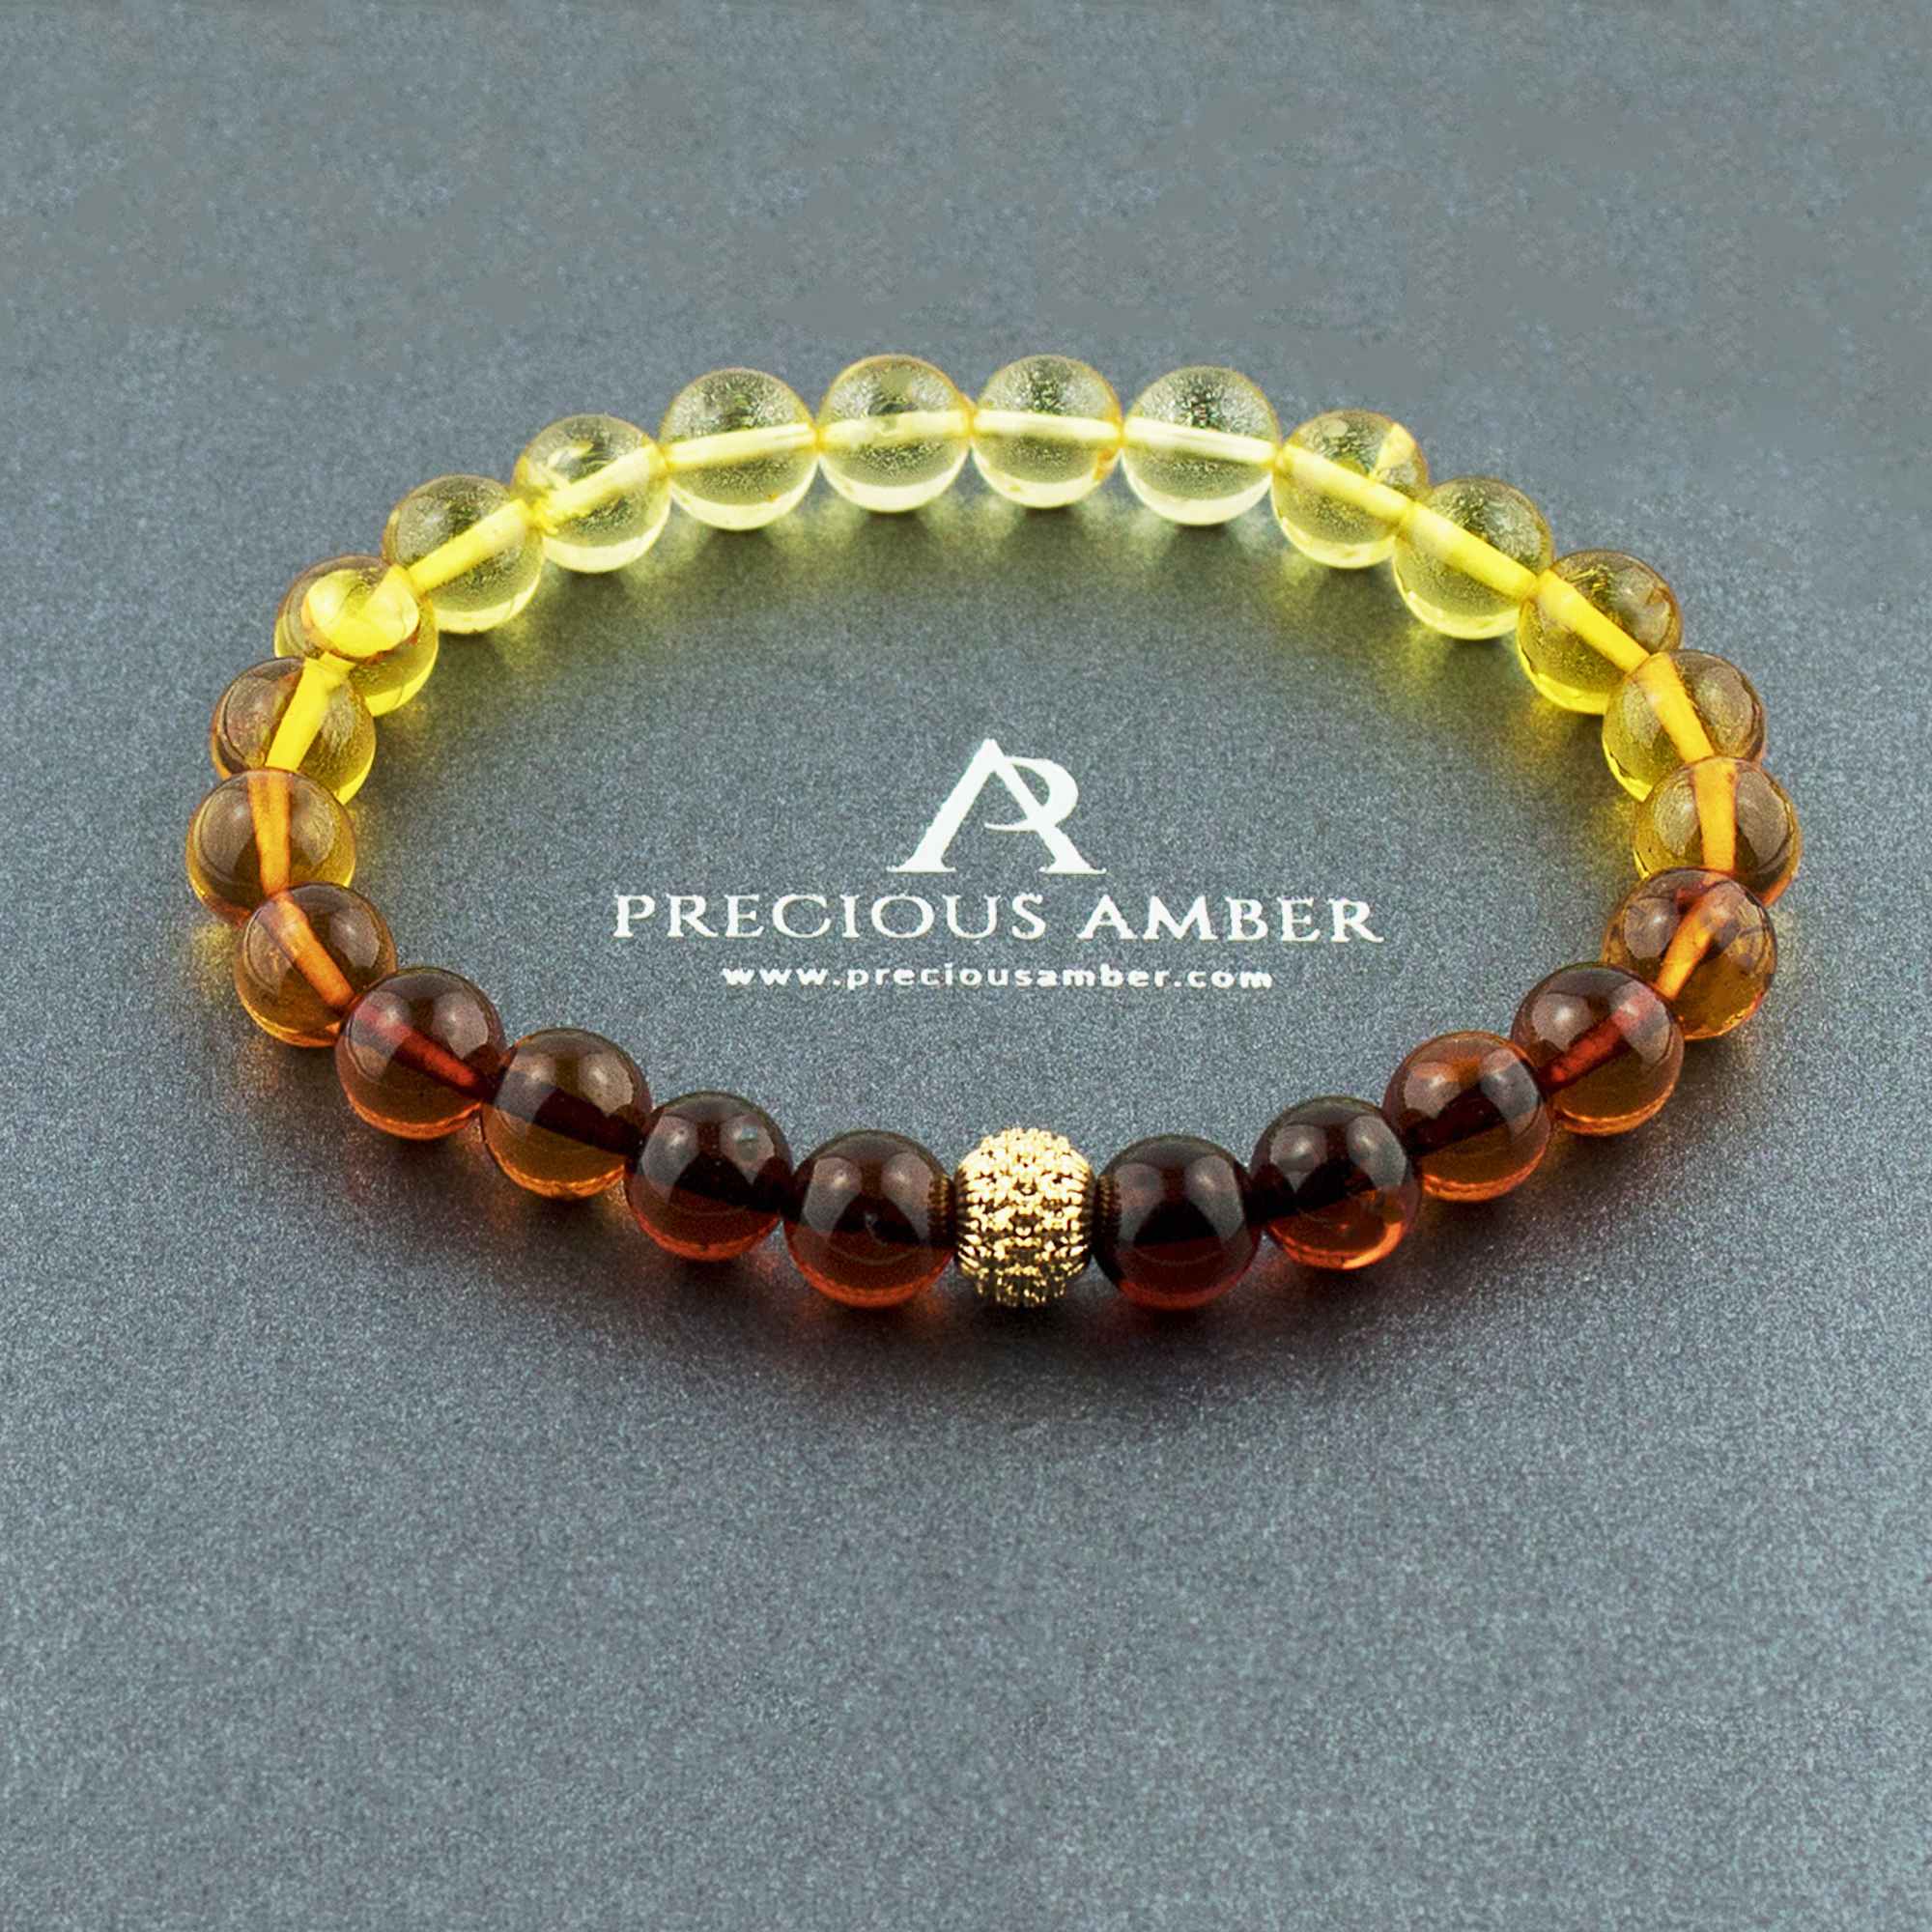 Adjustable amber teething bracelet or anklet with blue aventurine